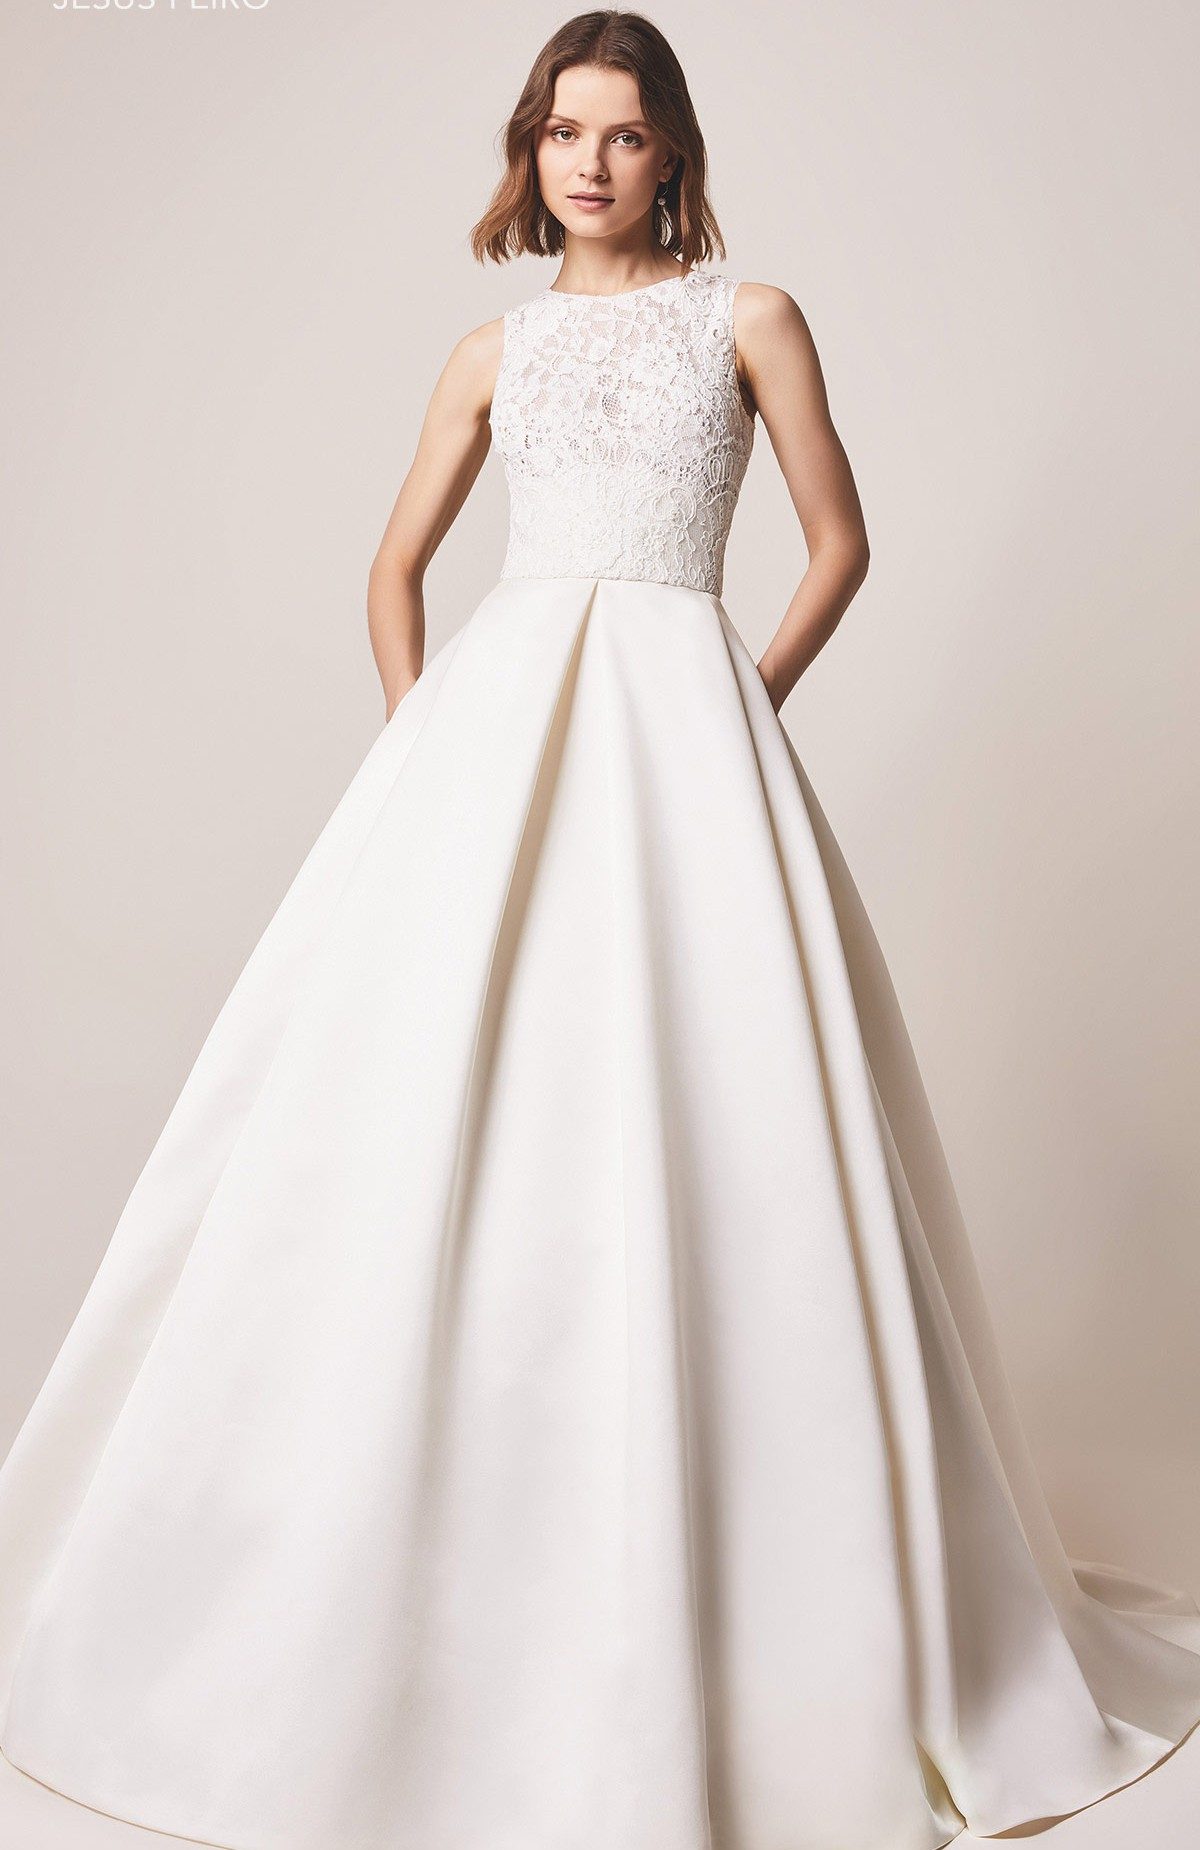 Diseñadores de vestidos de novia | JESUS PEIRO